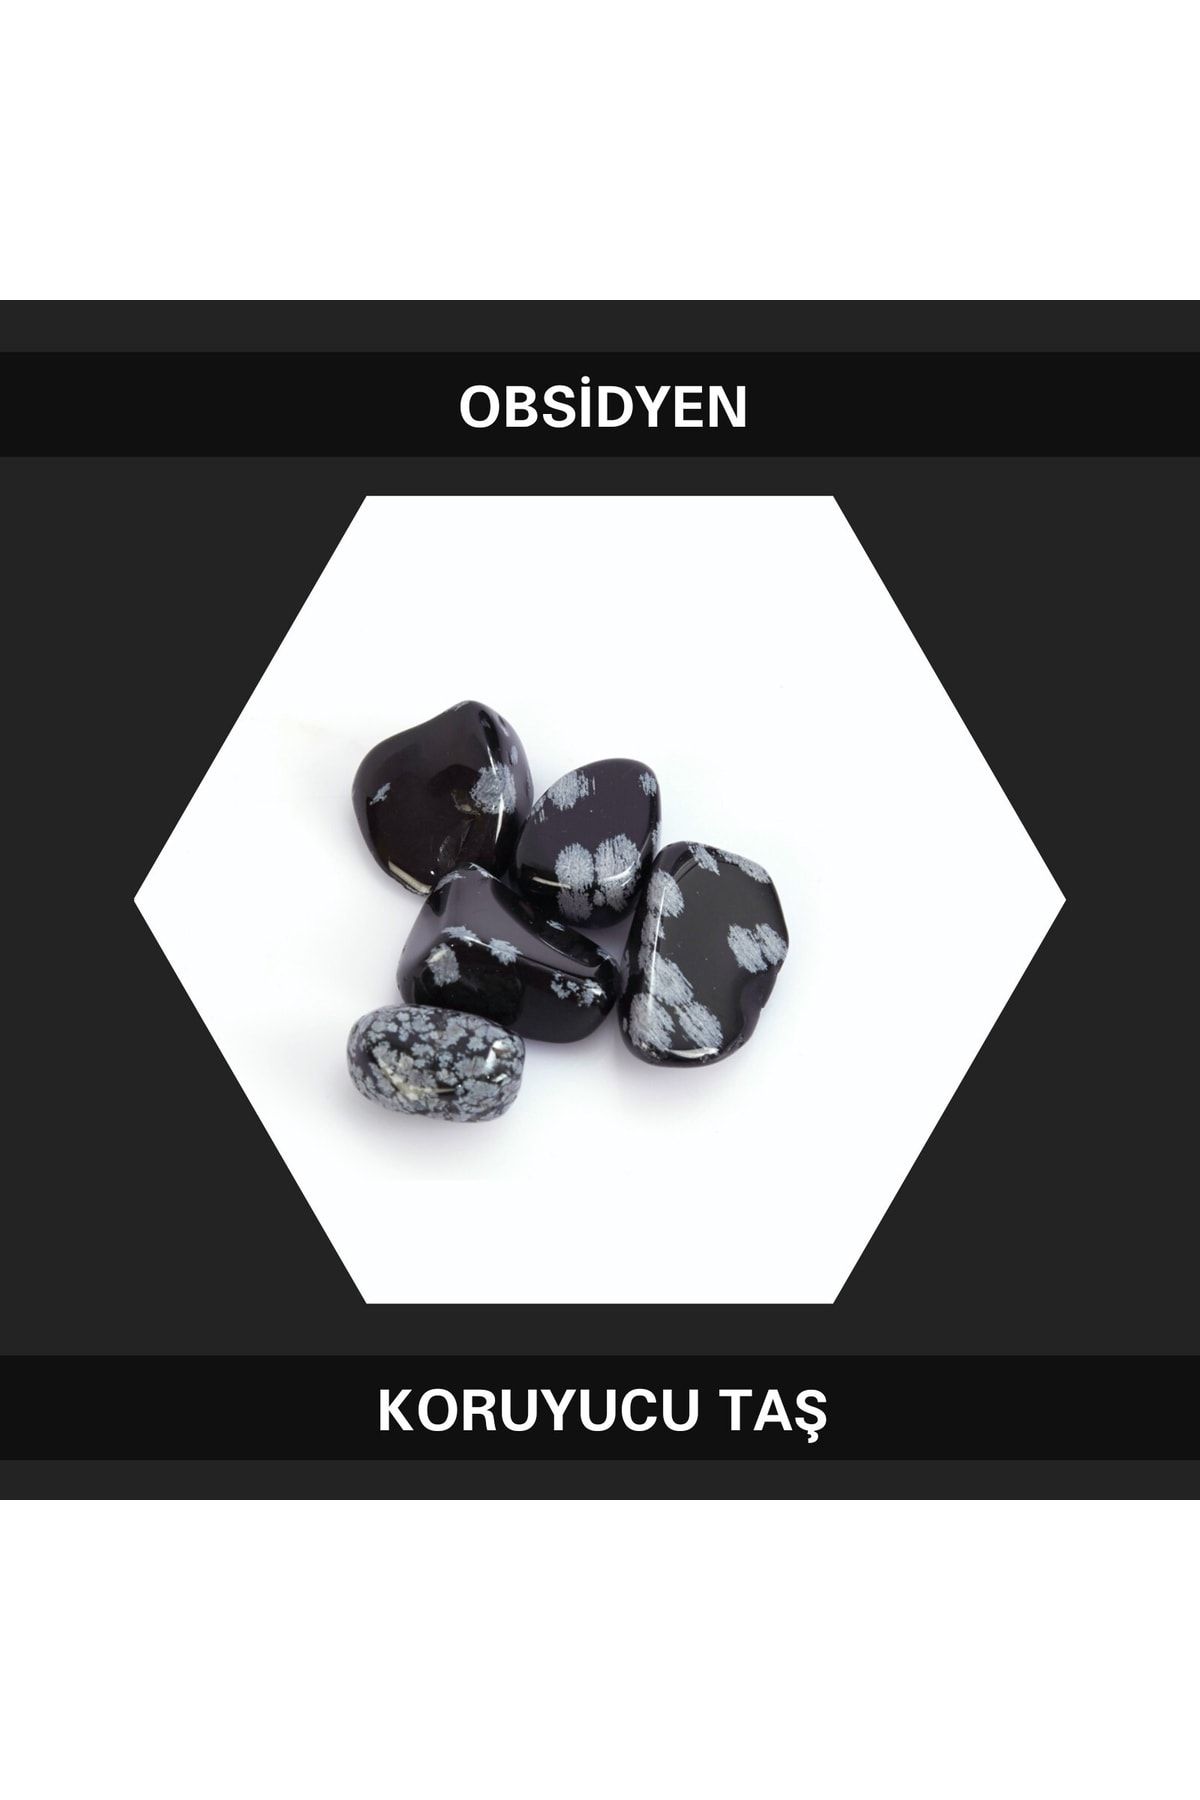 Sahi Aksesuar Karlı Obsidyen Doğal Taş Tamburlanmış Parça Stres Taşları